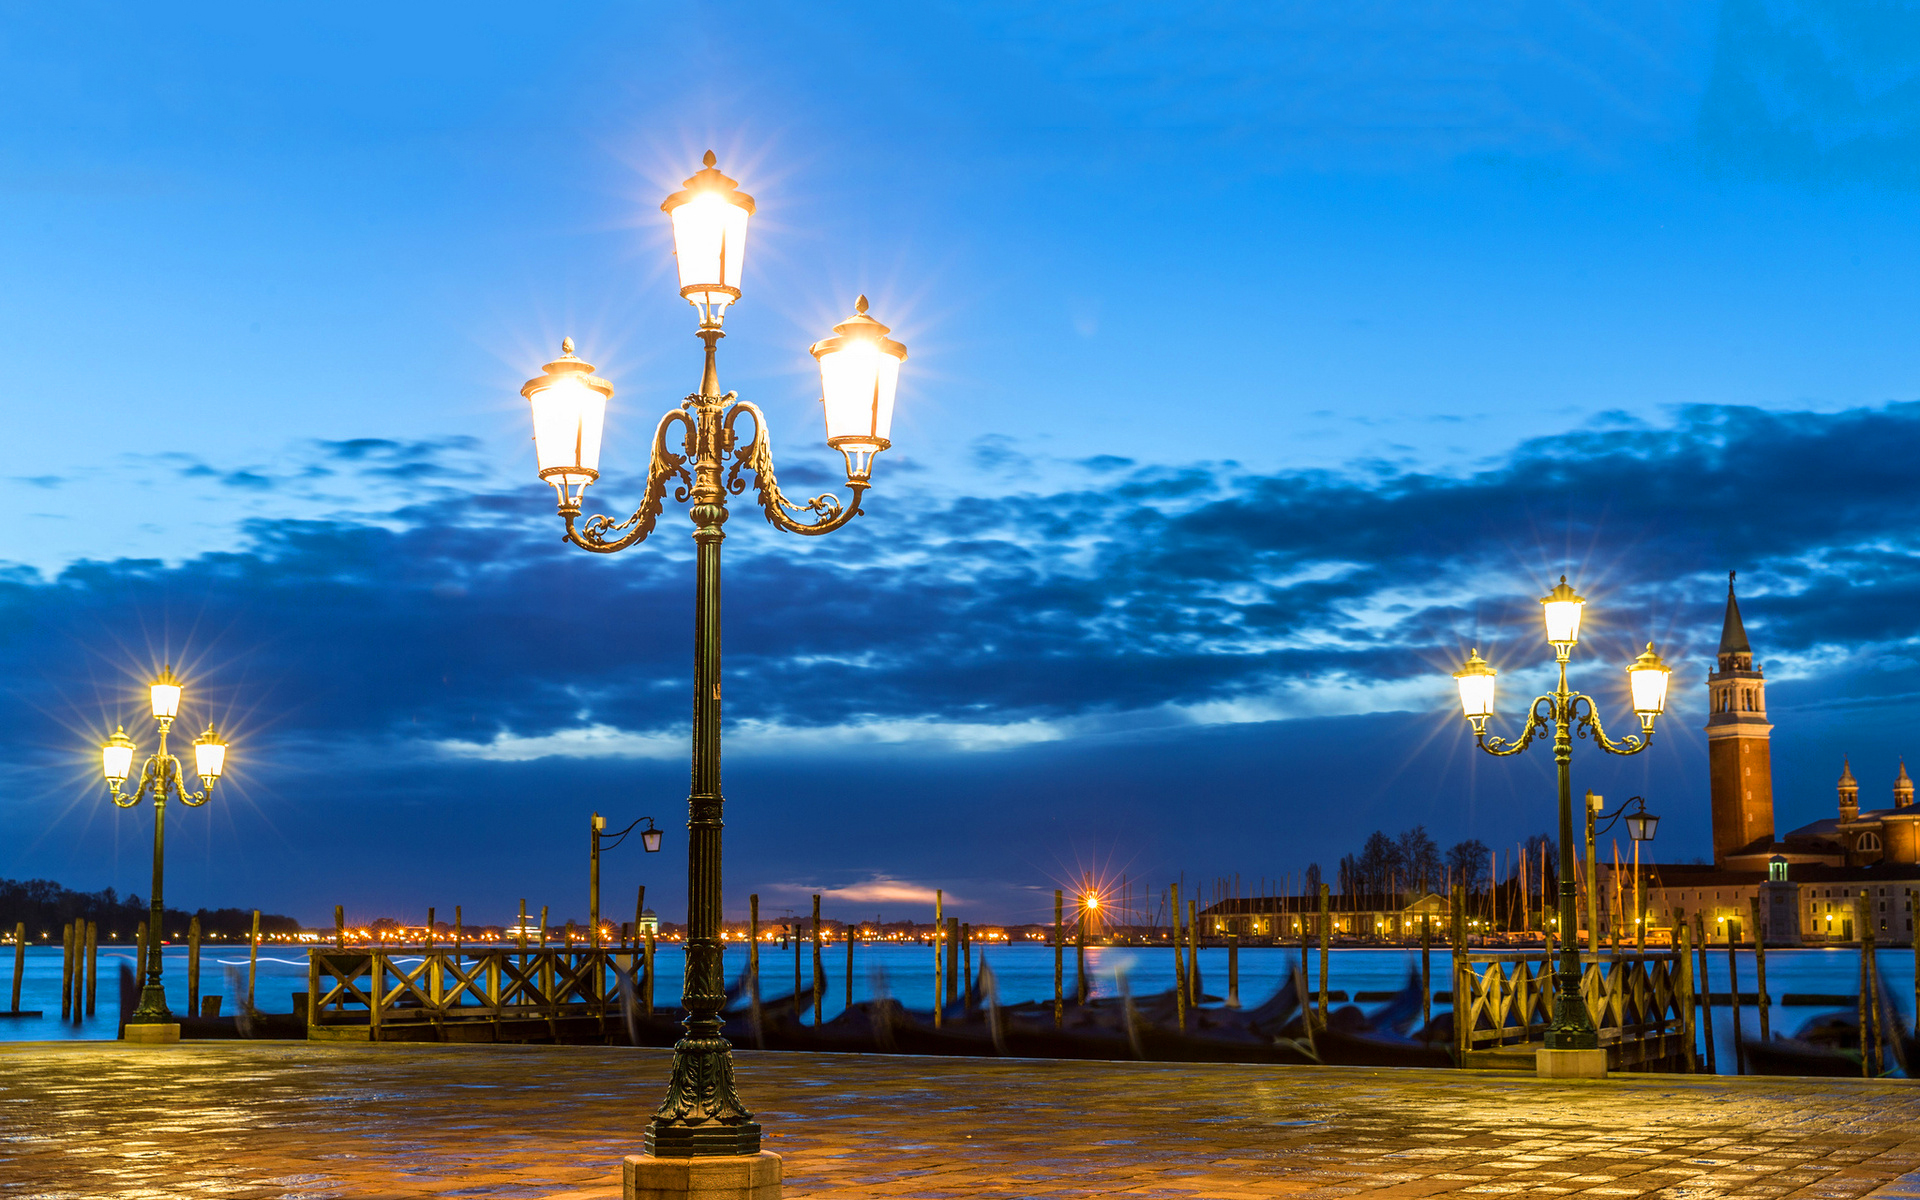 Romantic Night In Venice